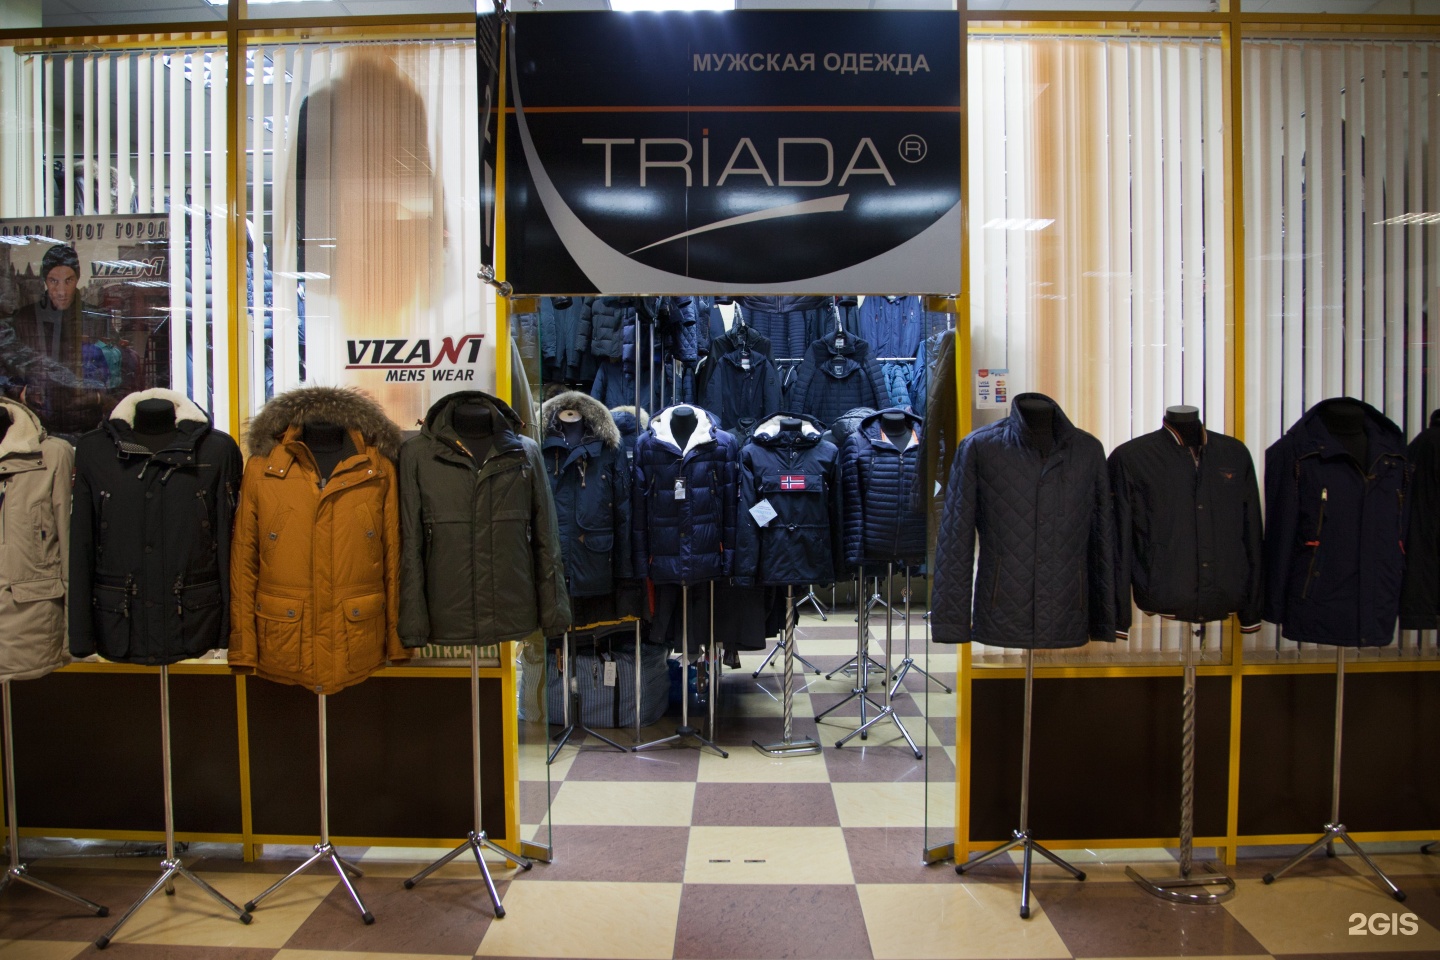 Магазин Одежды Белгород